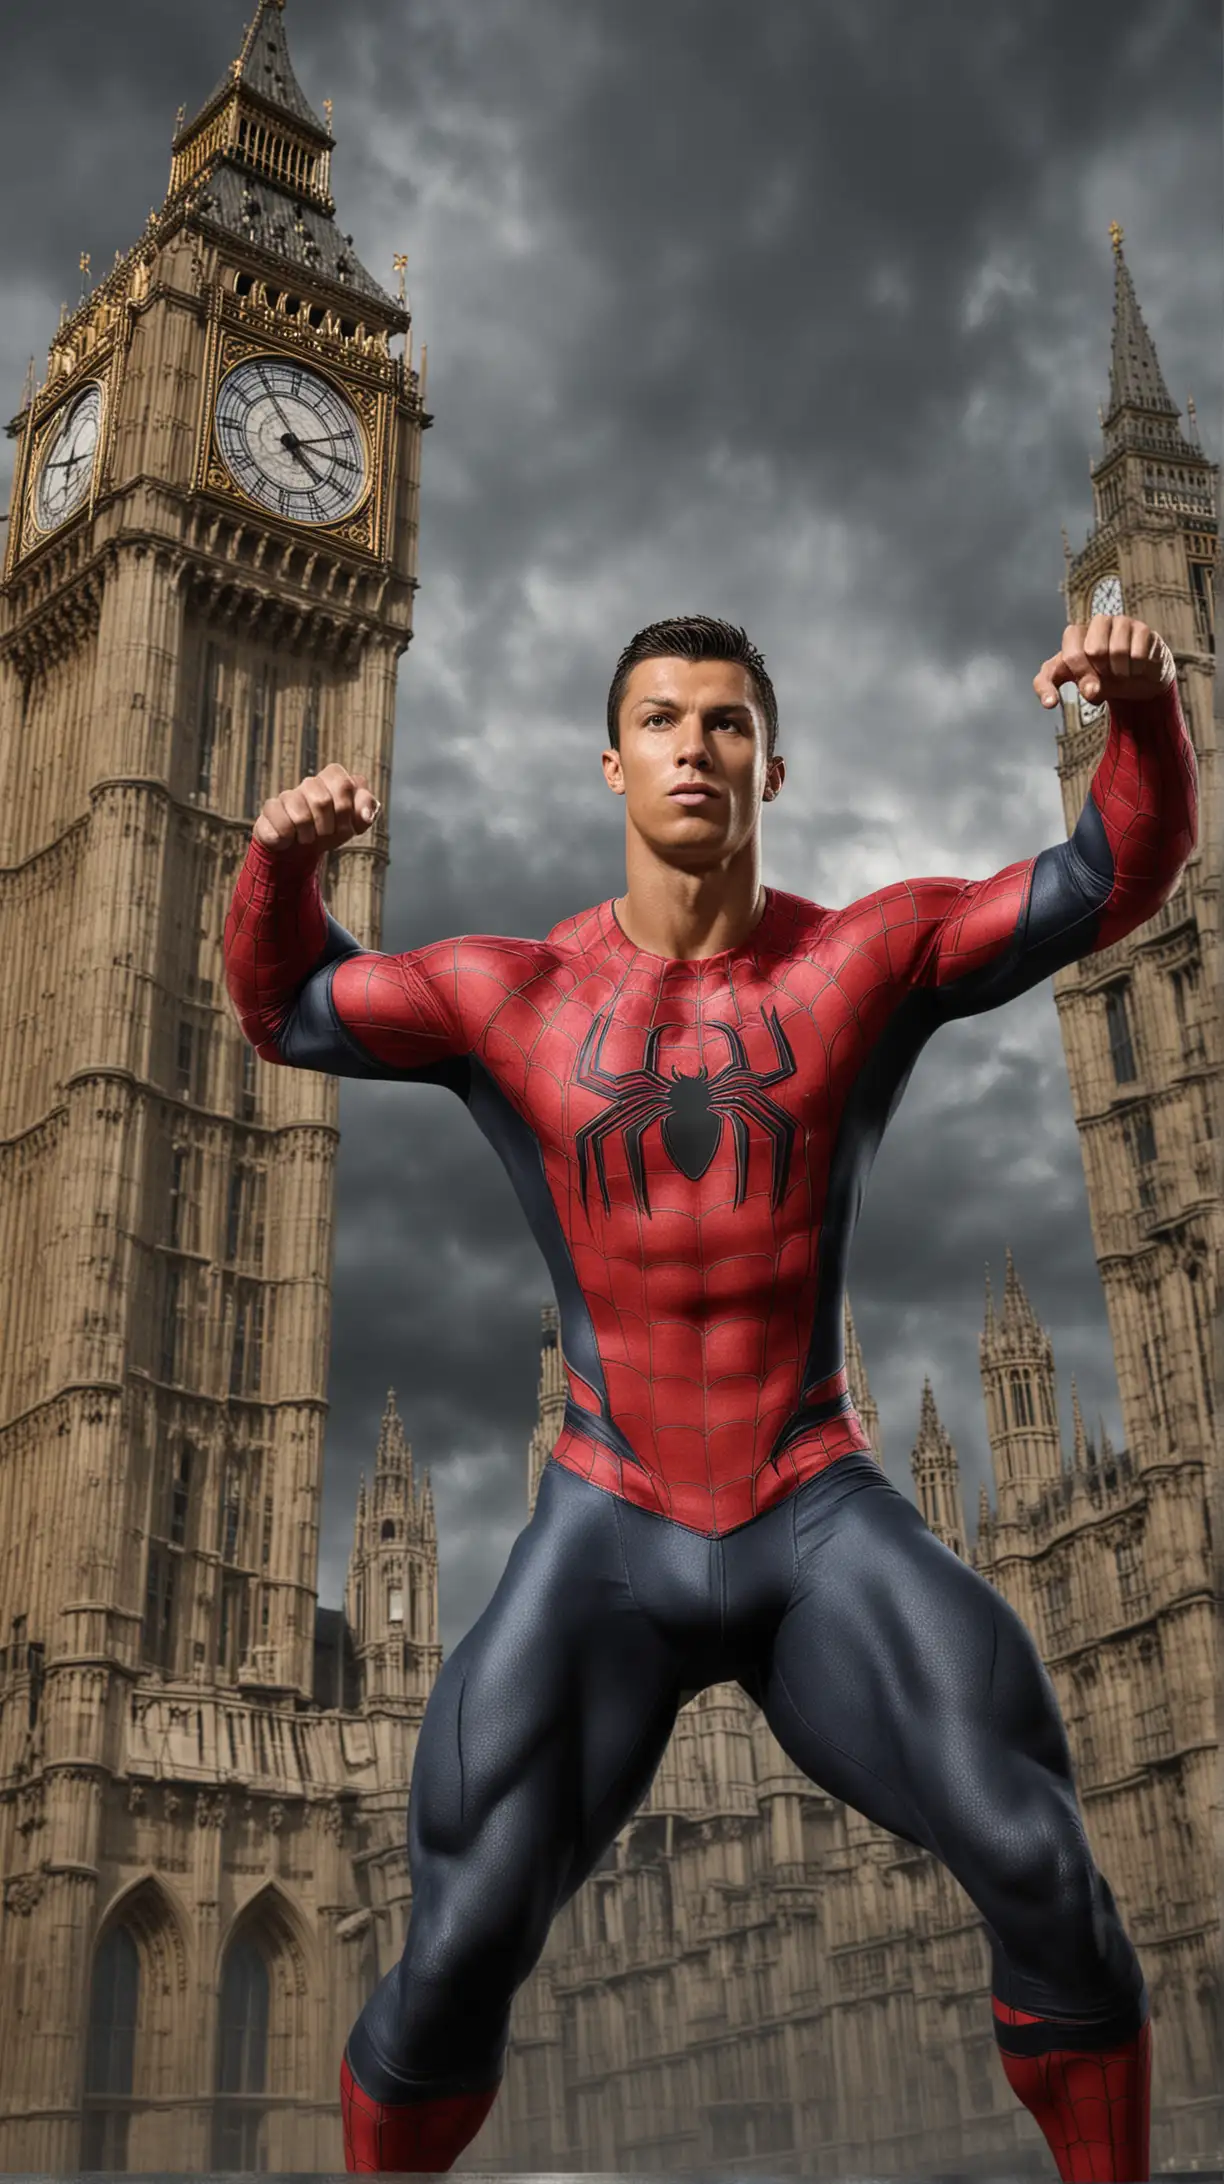 Cristiano Ronaldo as Spiderman, very muscular, big Ben background 